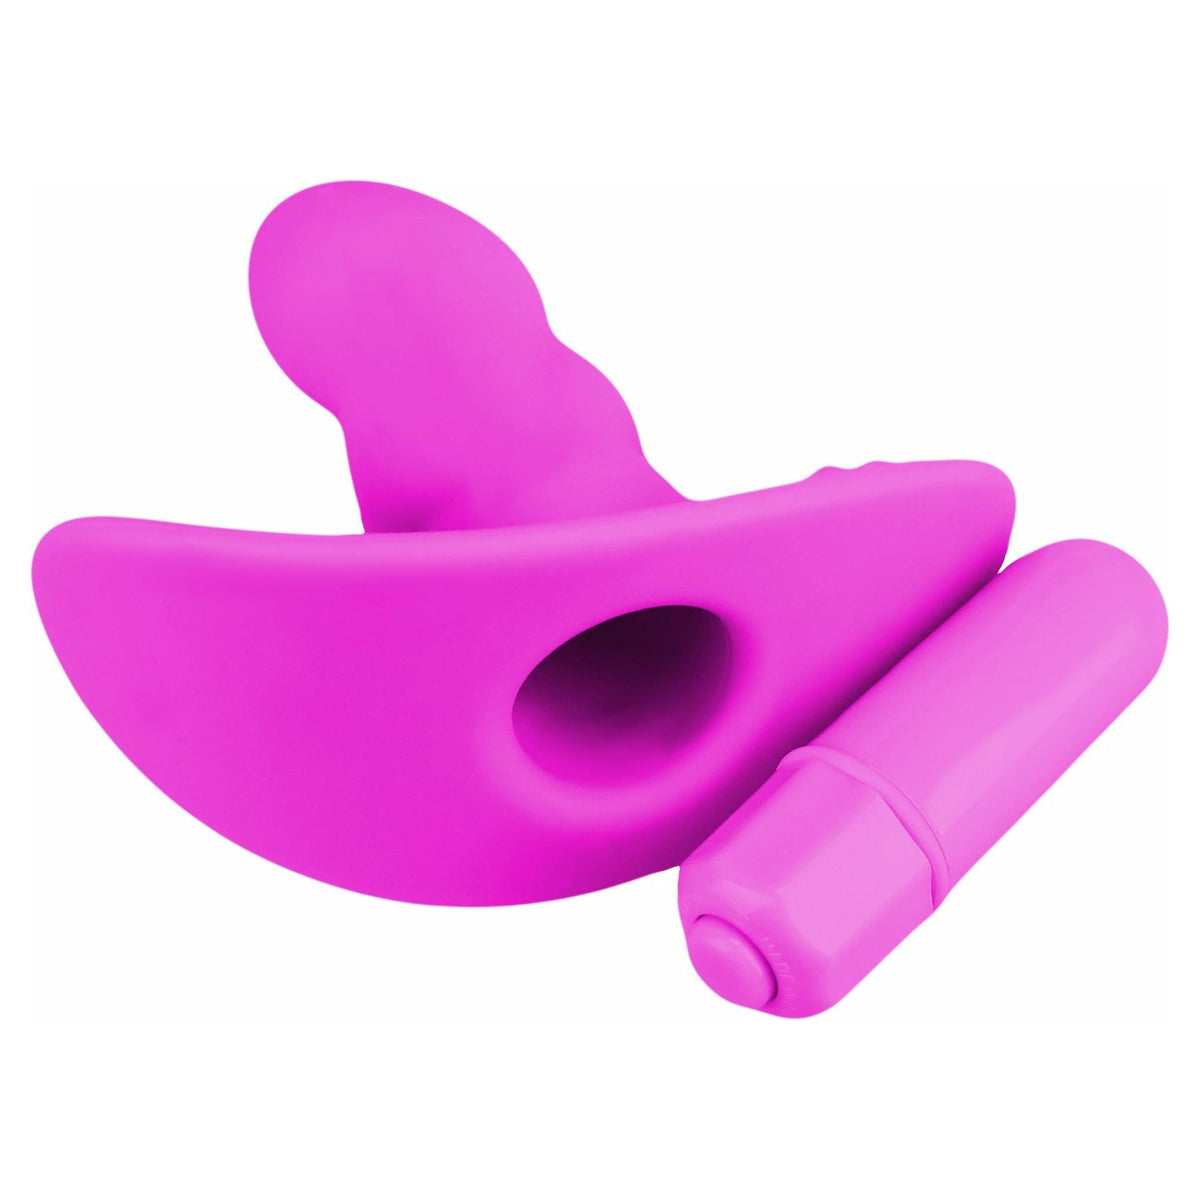 NMC Mystery High - Vibrating Butt Plug - Pink